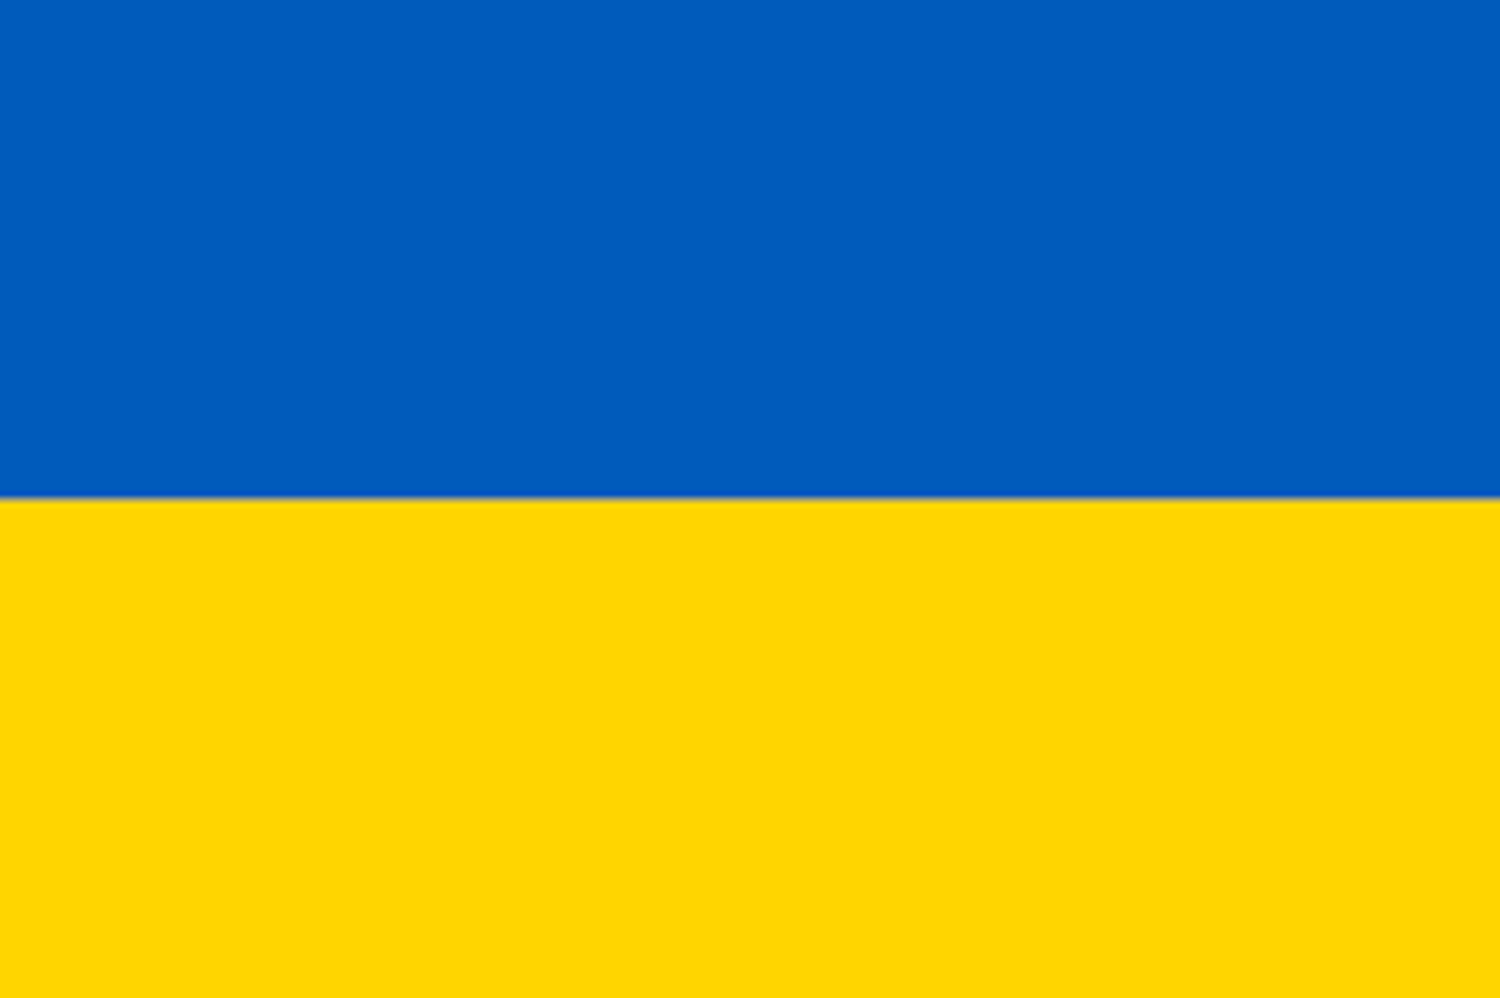 17/06/22 : LE PRESIDENT EMMANUEL MACRON S'EST RENDU EN UKRAINE